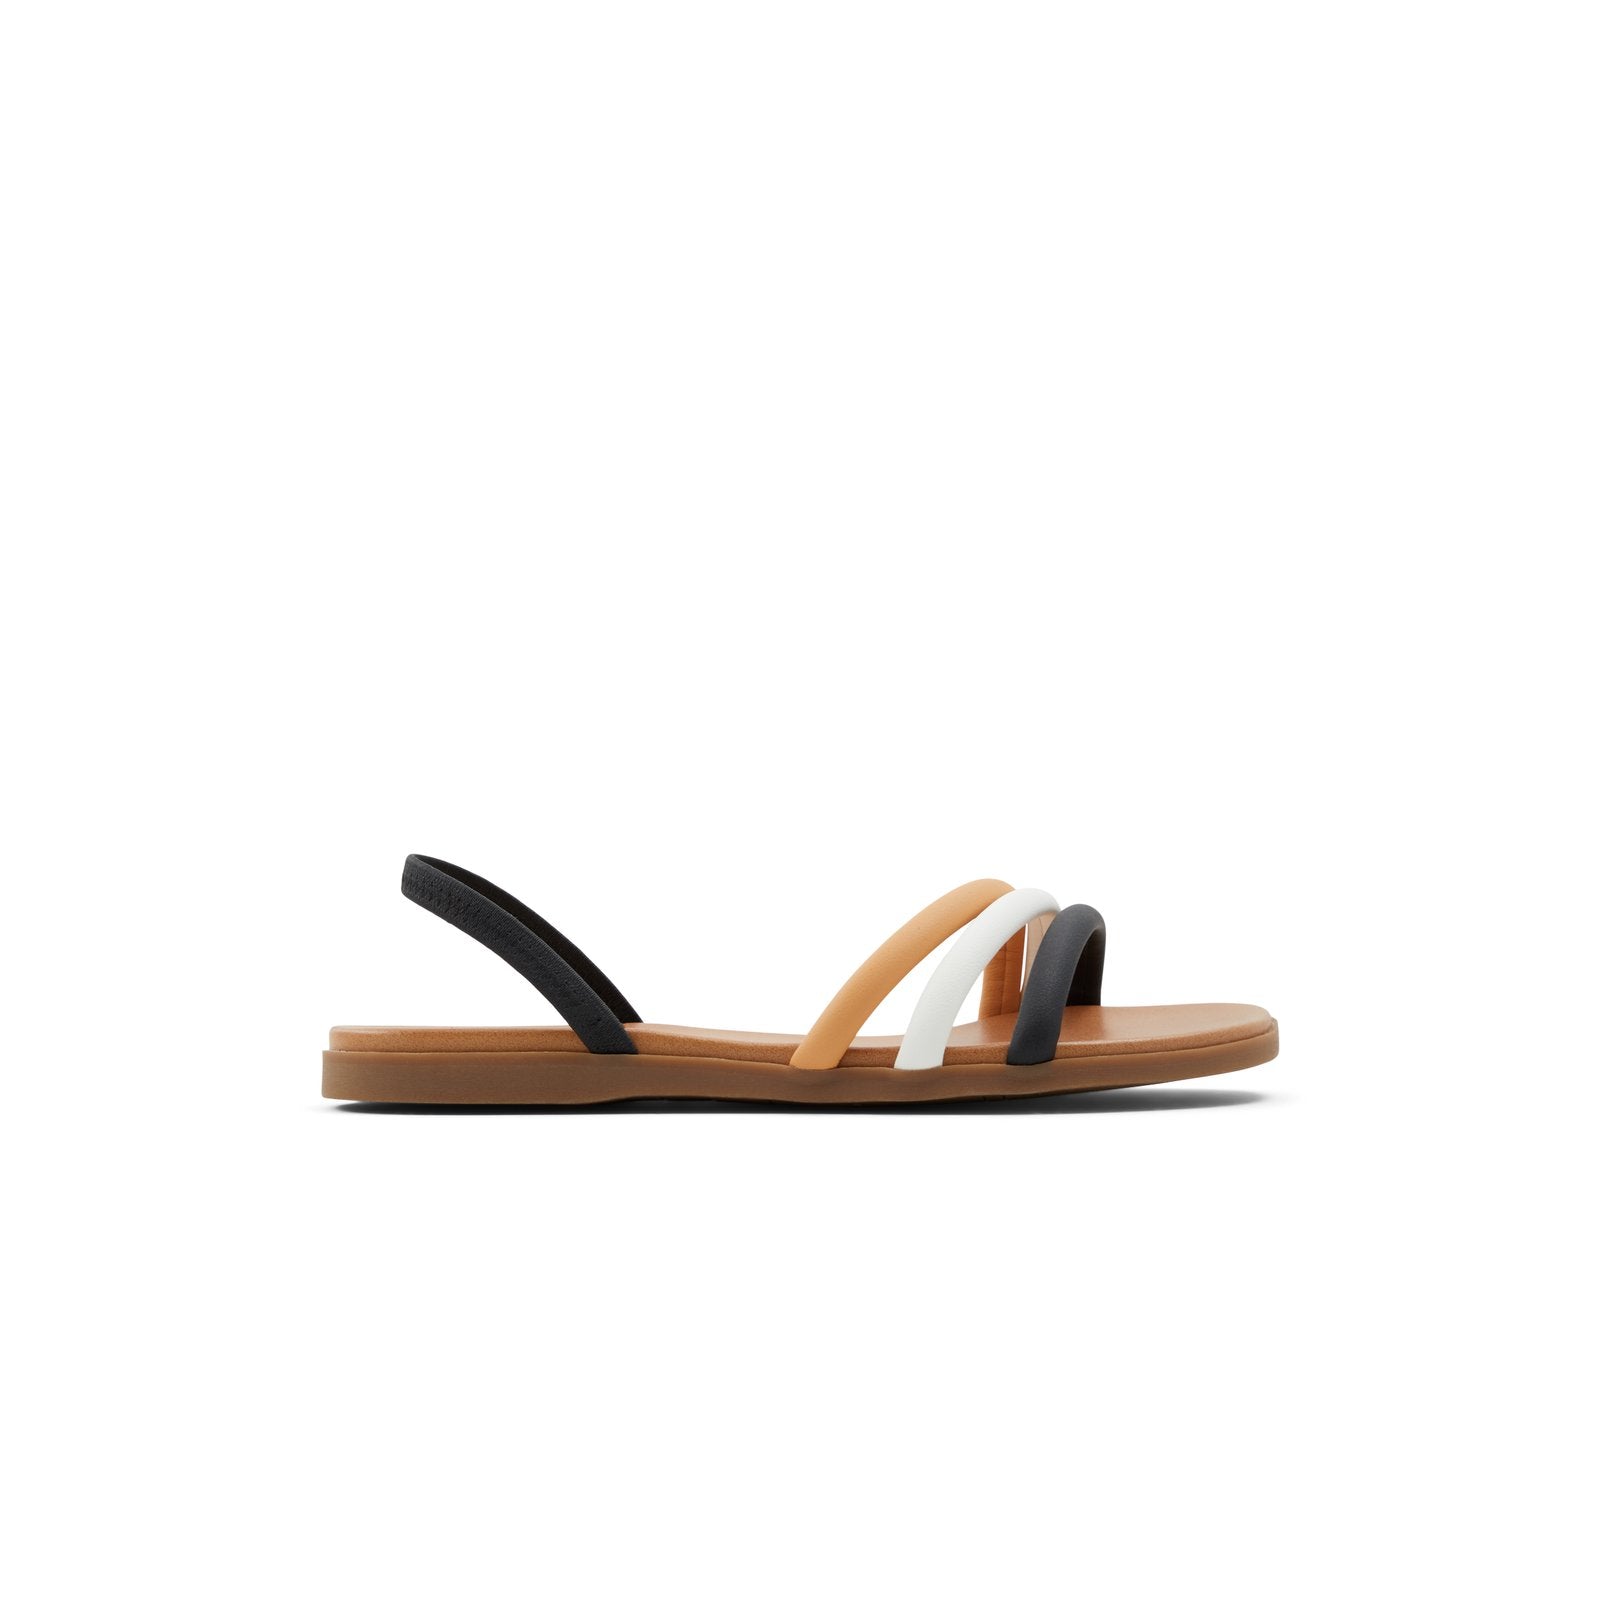 Emalia / Flat Sandals Women Shoes - Black Multi - CALL IT SPRING KSA